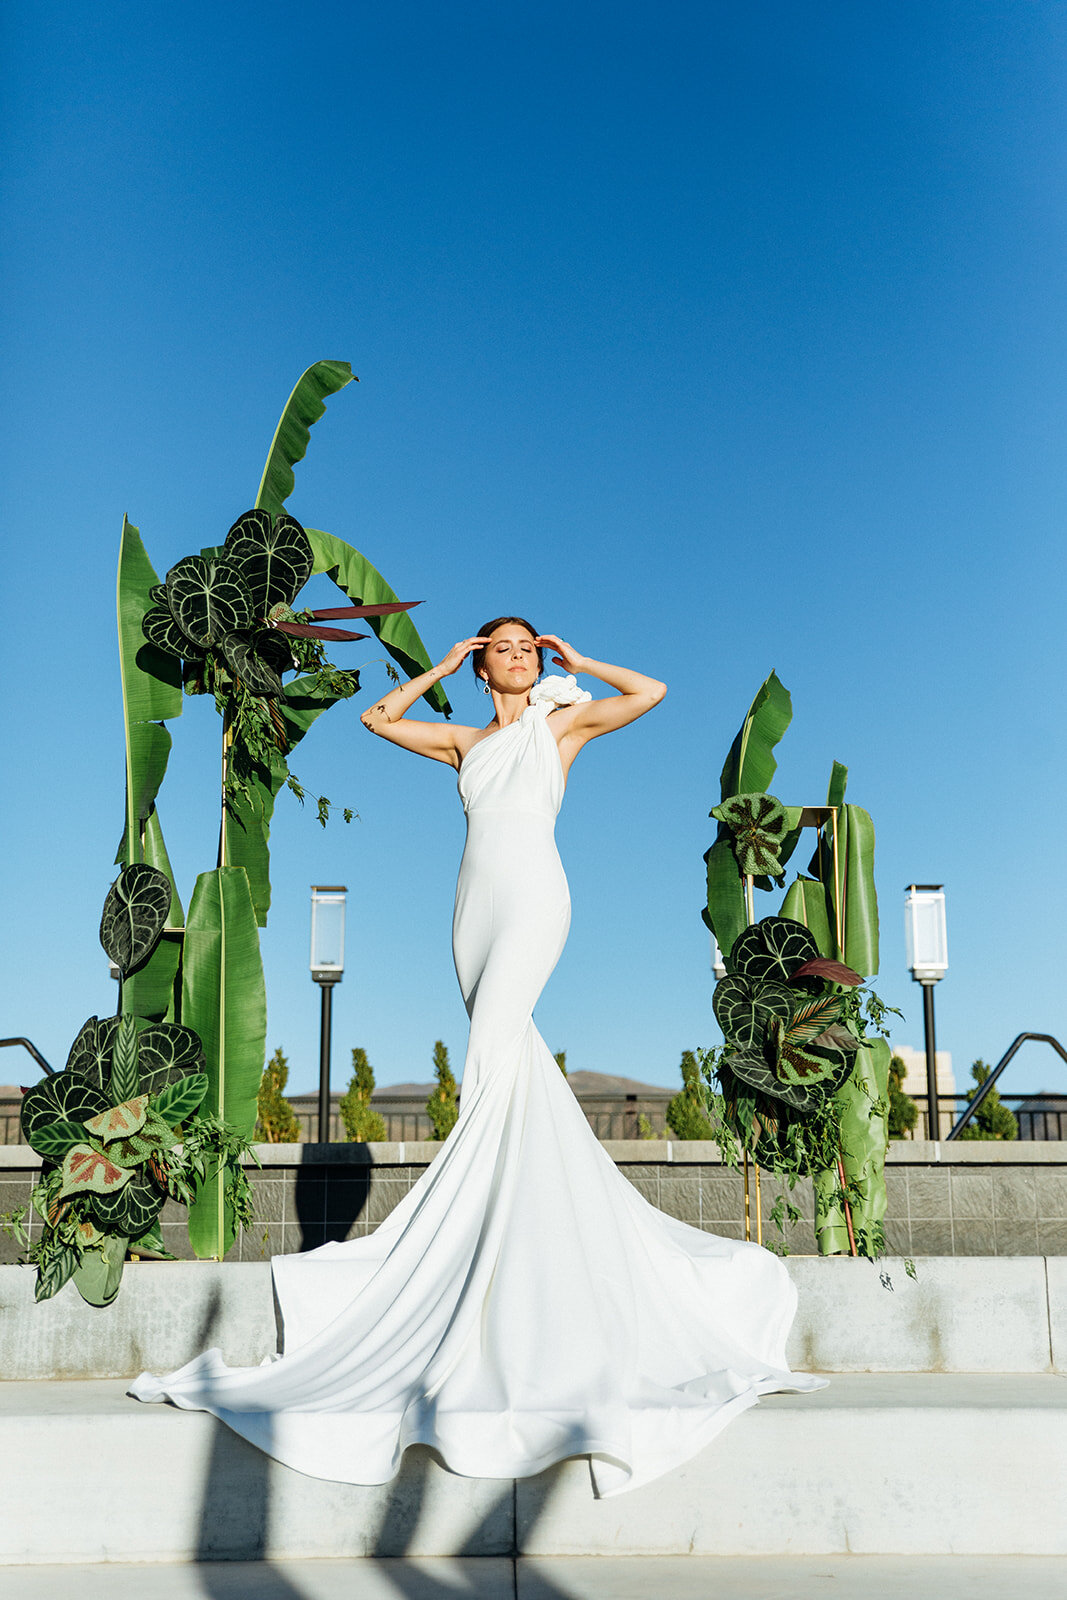 utah-bride-and-groom-wedding-magazine-lesbian-editorial-salt-lake-city-wedding-michael-cozzens-photo-video-519.jpg